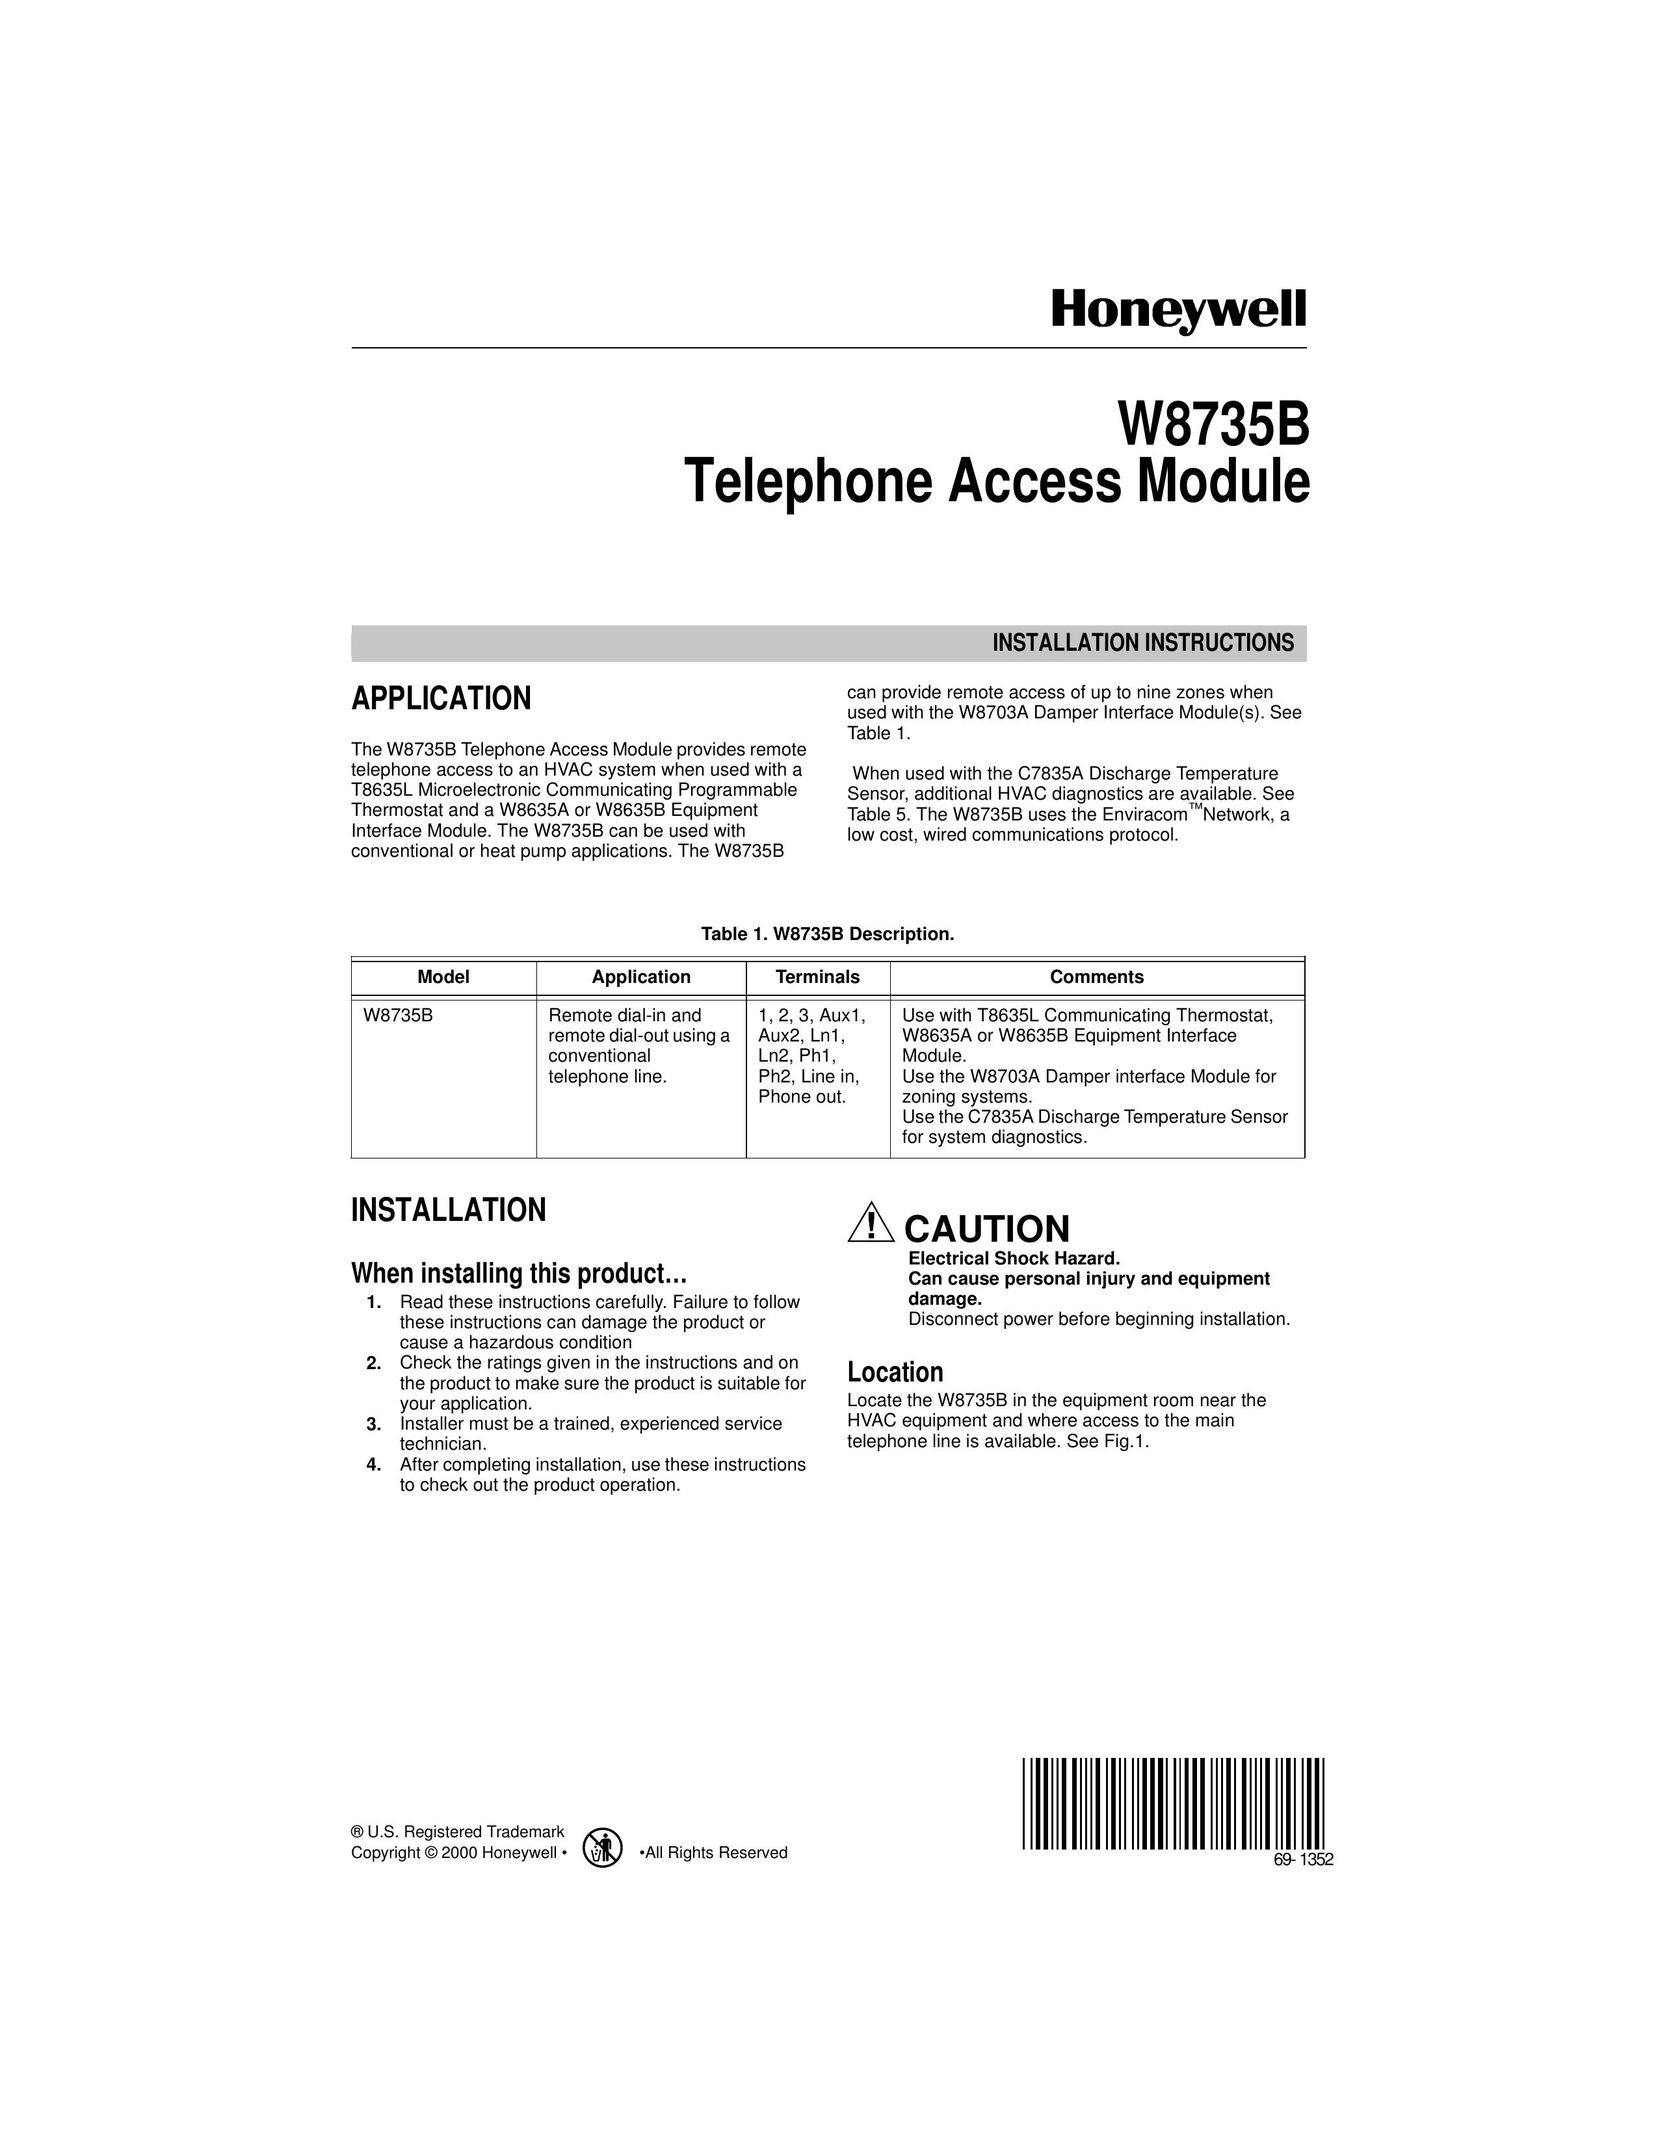 Honeywell W8735B Telephone User Manual